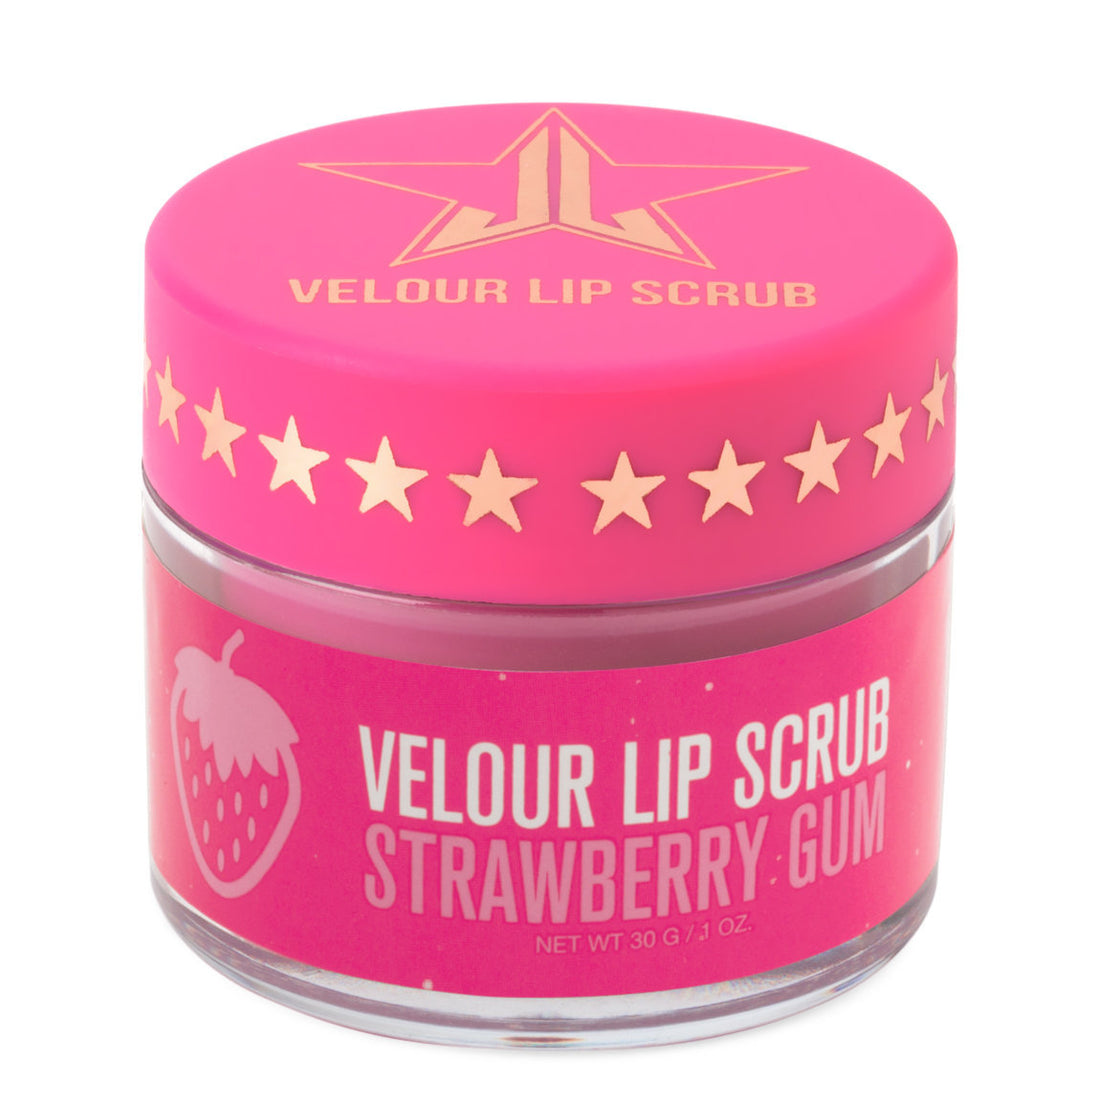 Velour Lip Scrub - Strawberry Gum